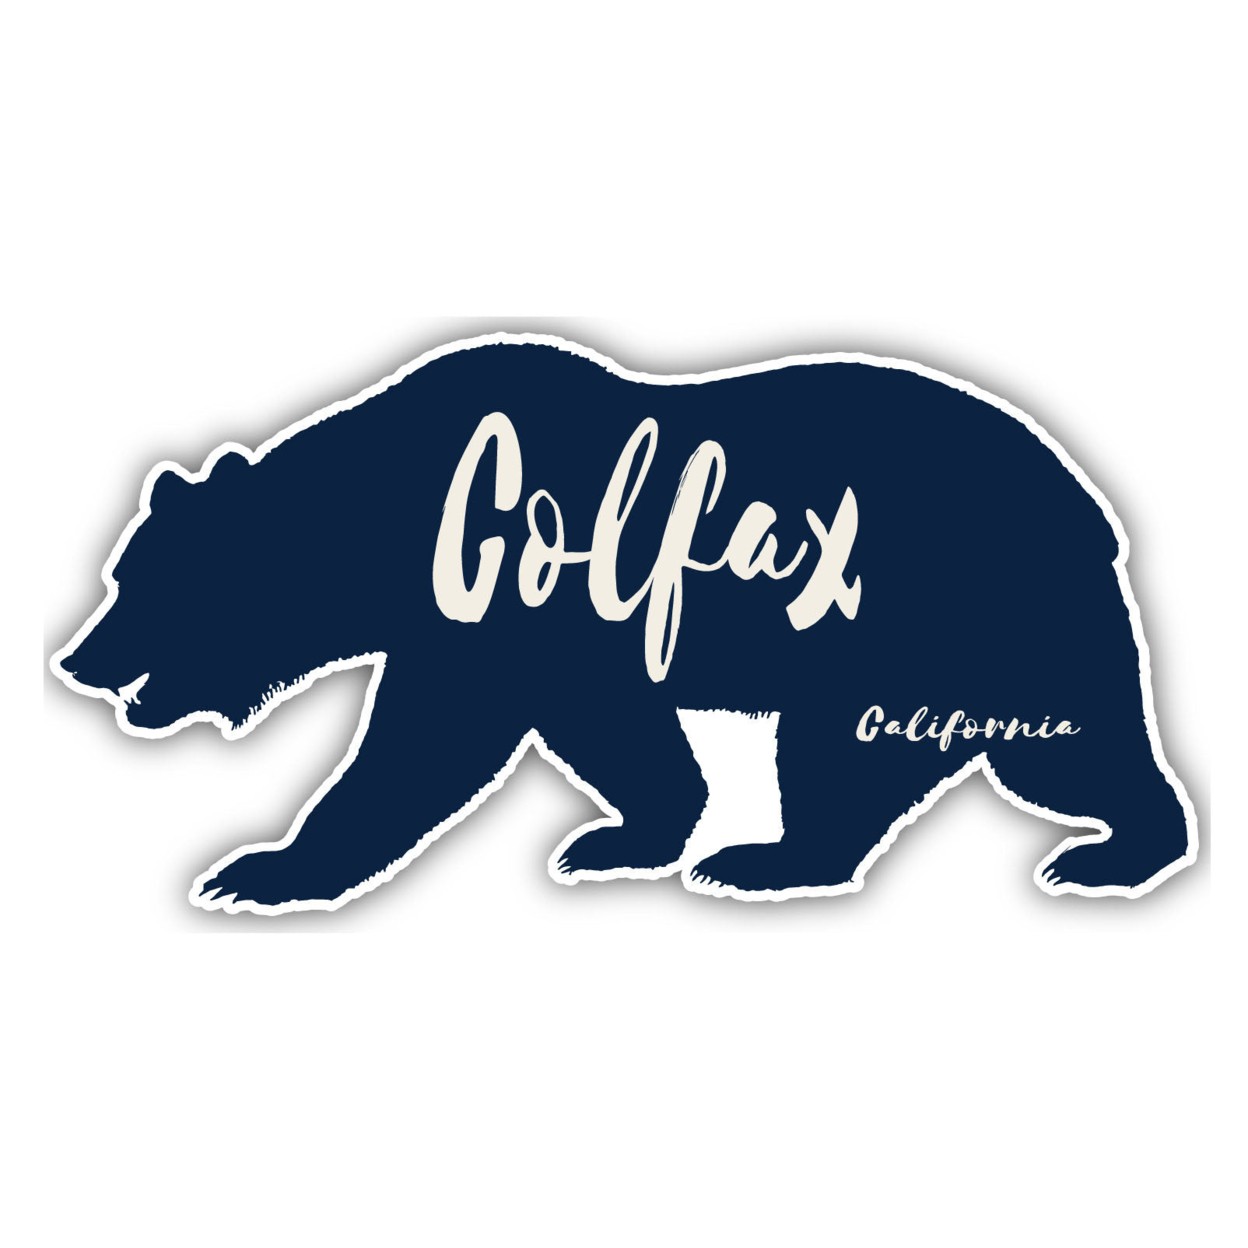 Colfax California Souvenir Decorative Stickers (Choose Theme And Size) - Single Unit, 6-Inch, Bear